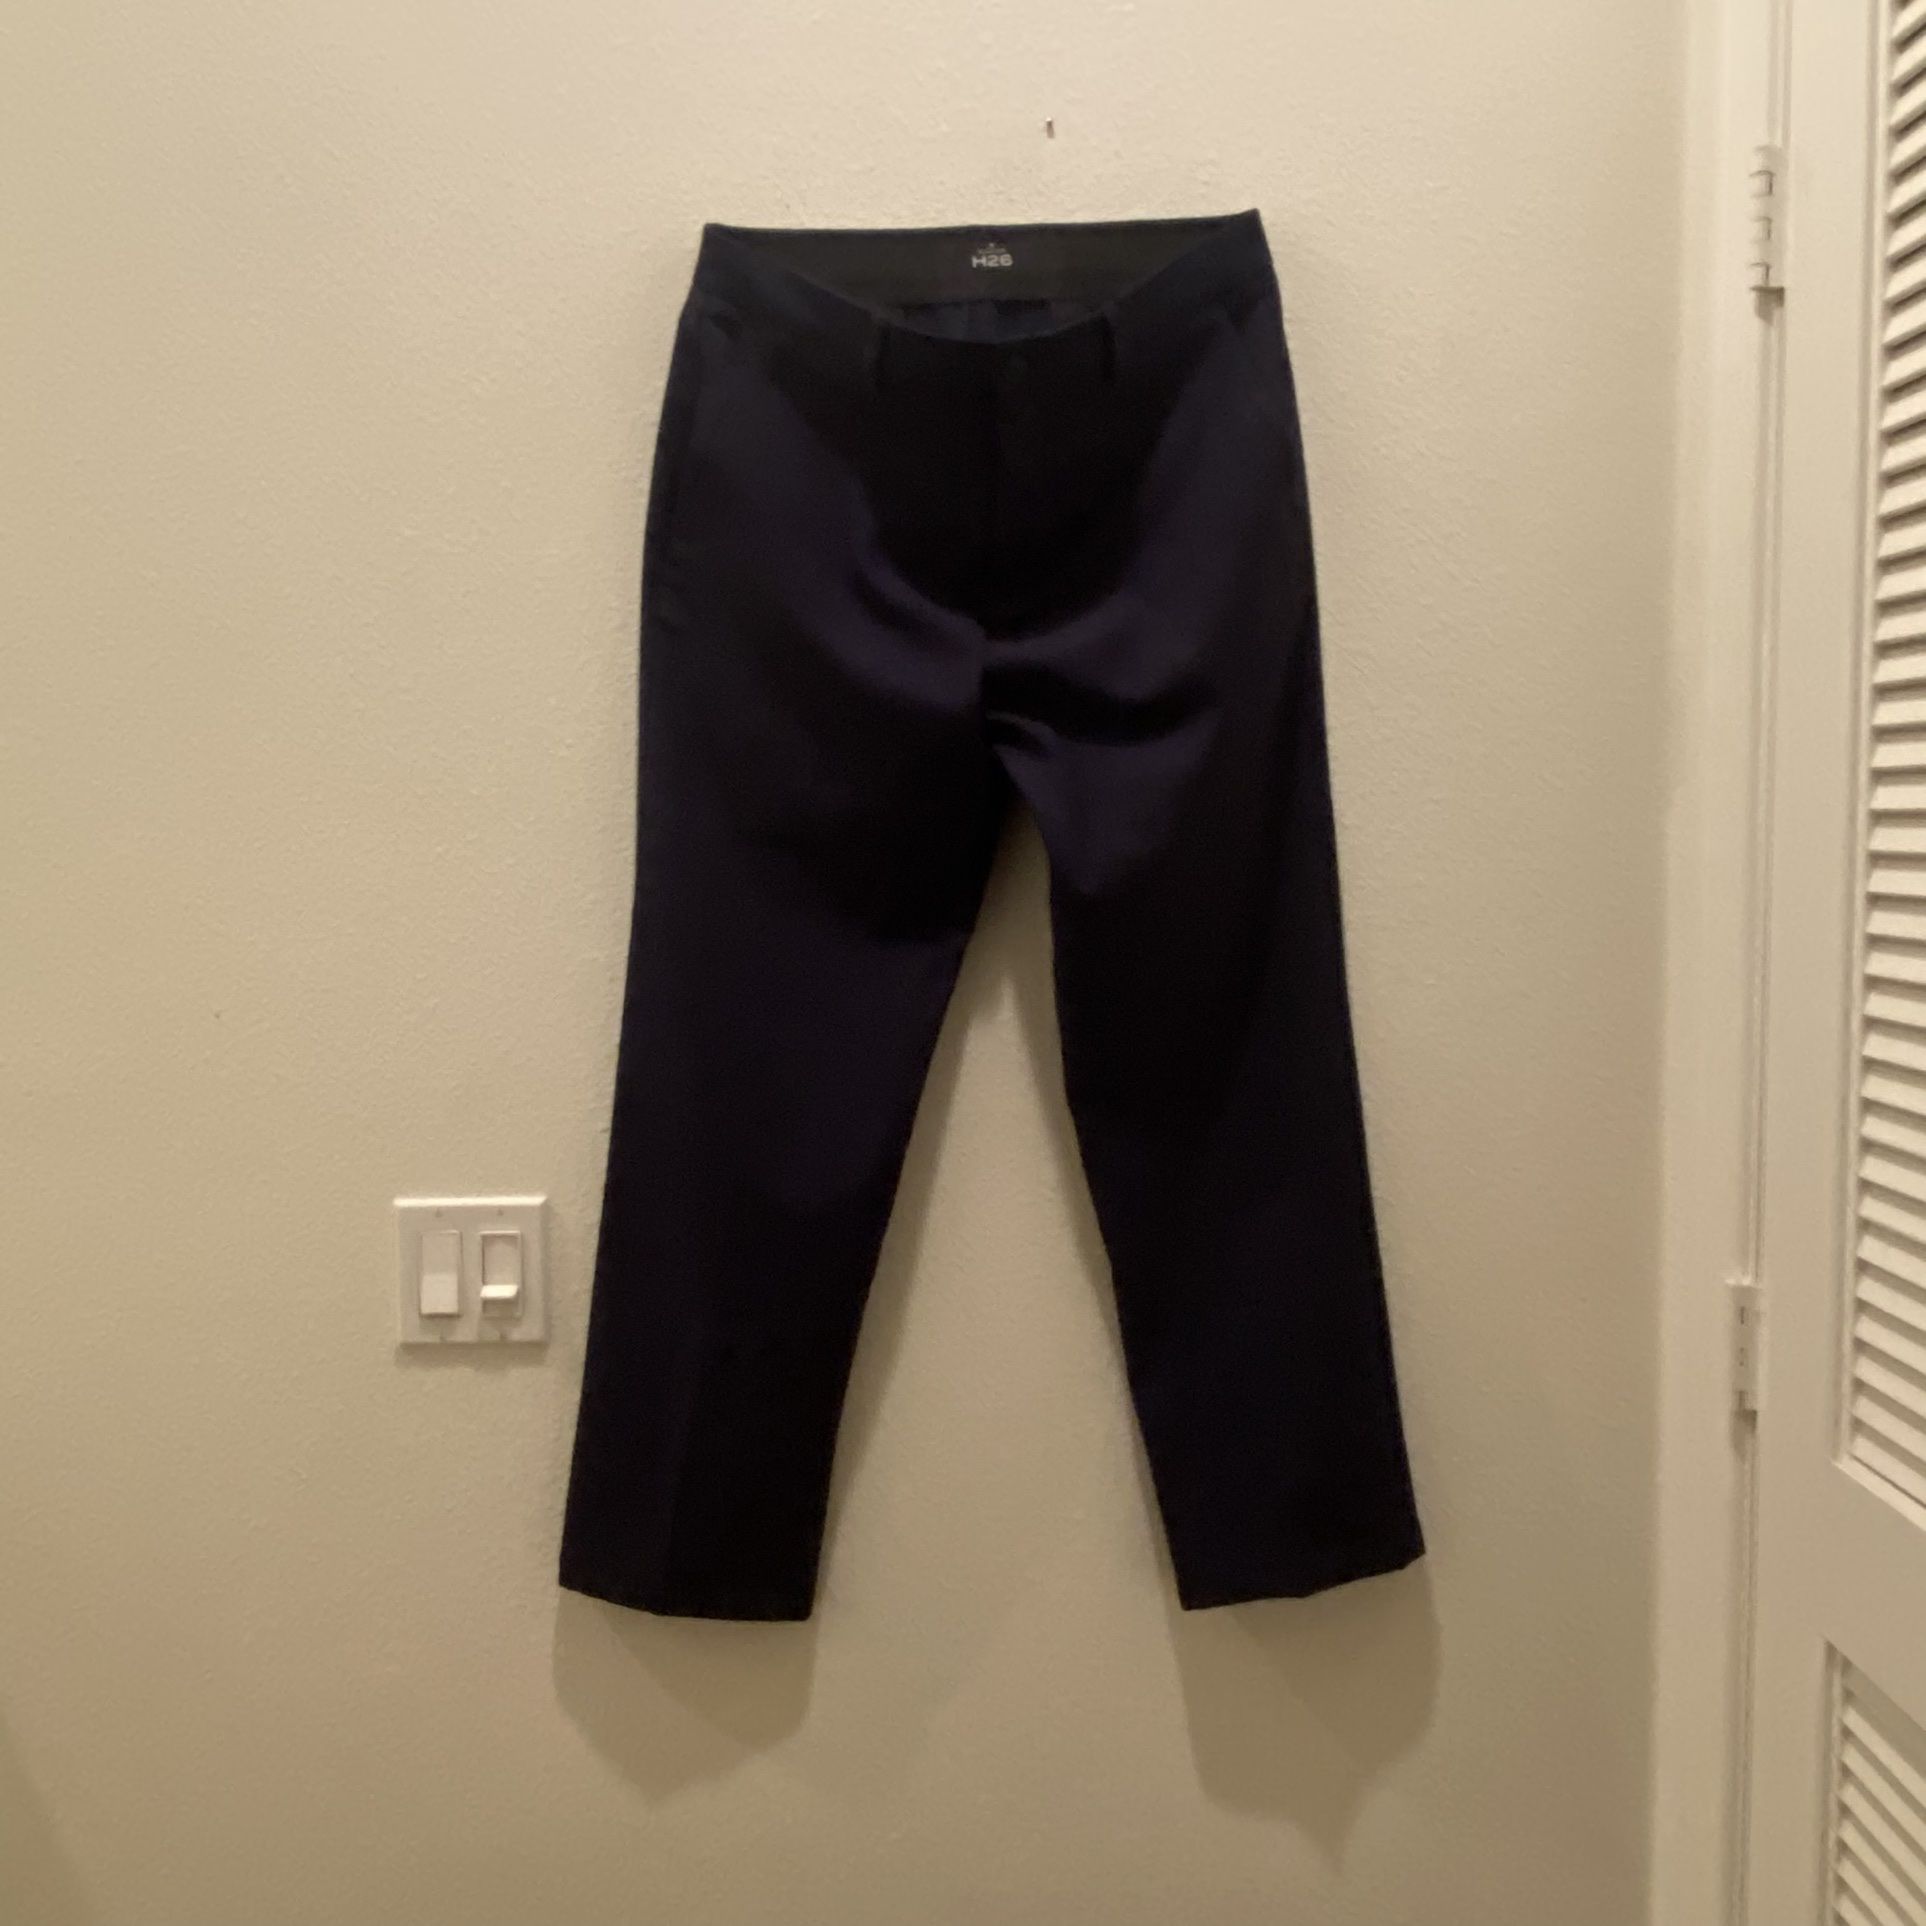 Hagar Dress Pants/Slacks (Size 32x30)